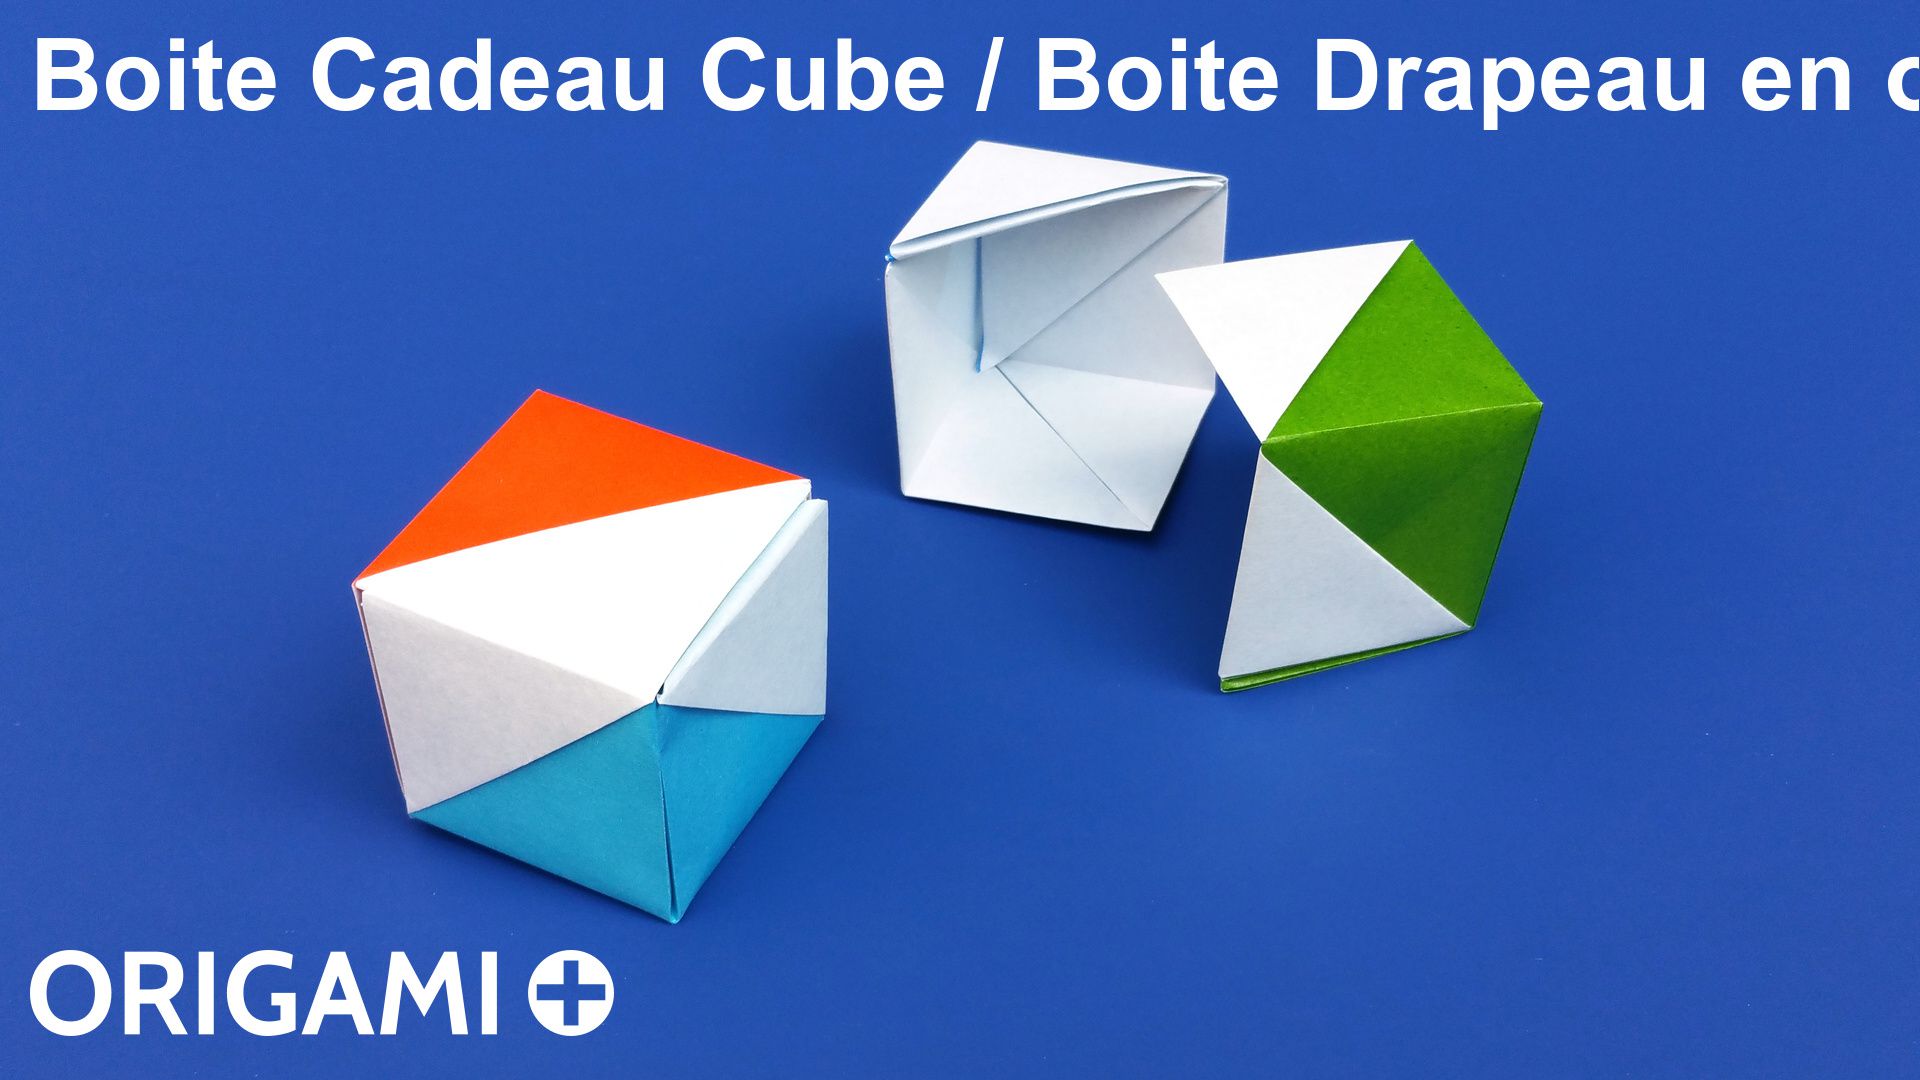 Boite Cadeau Cube Boite Drapeau En Origami